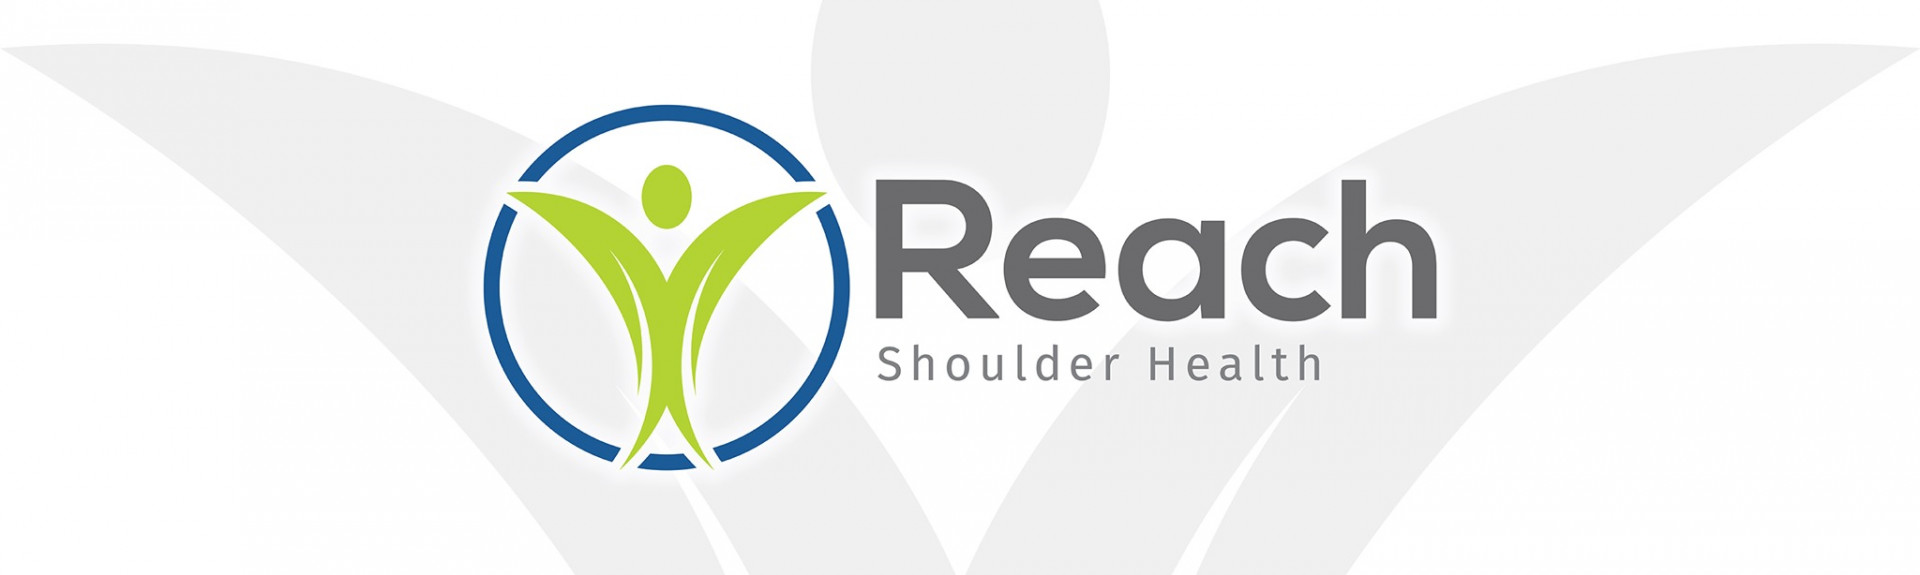 Reach Shoulder Health